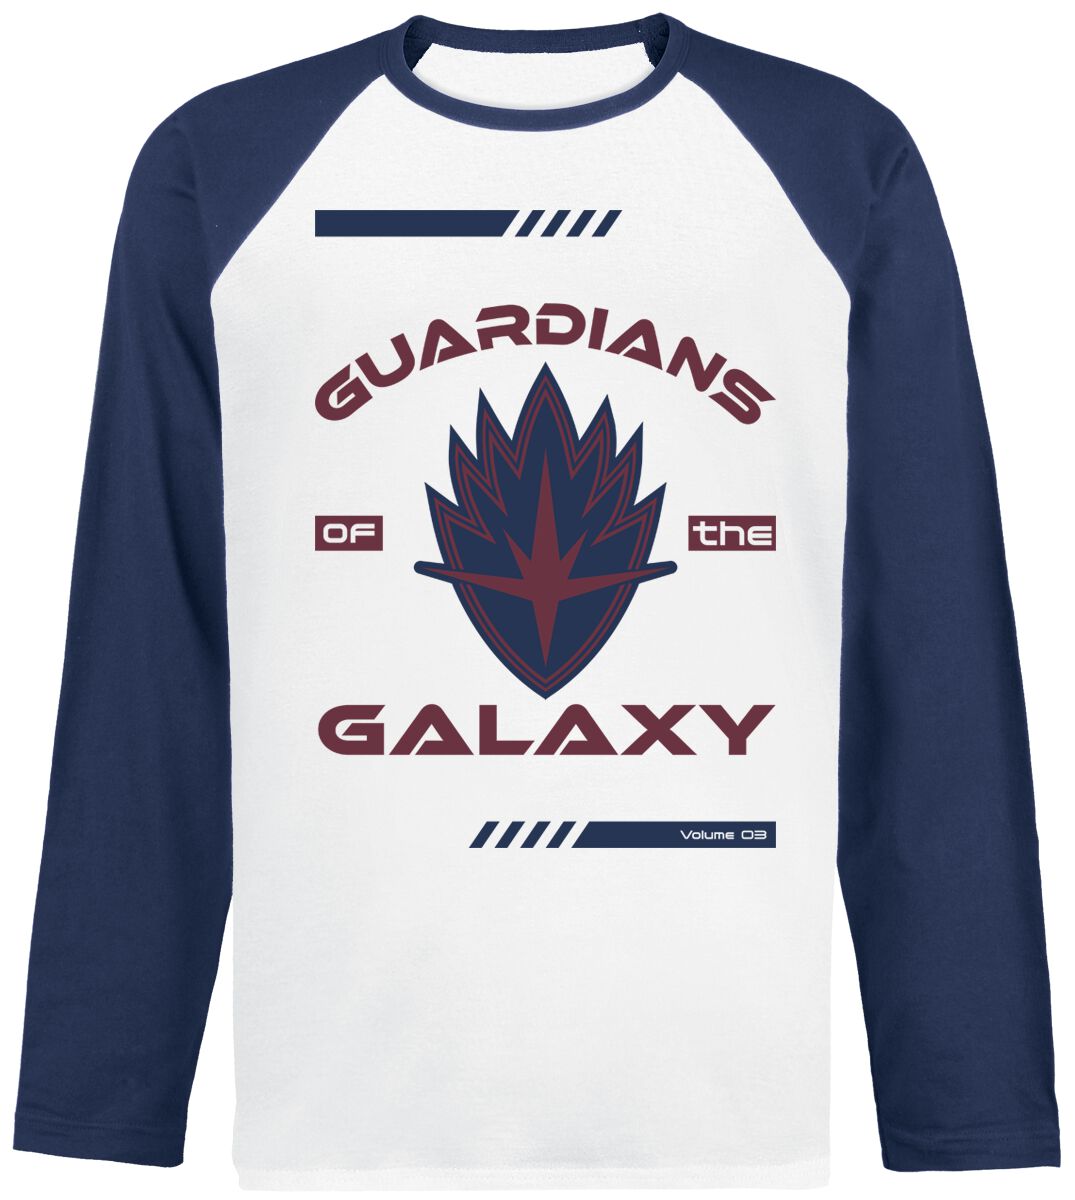 Guardians Of The Galaxy Vol. 3 - Badge Langarmshirt weiß navy in L